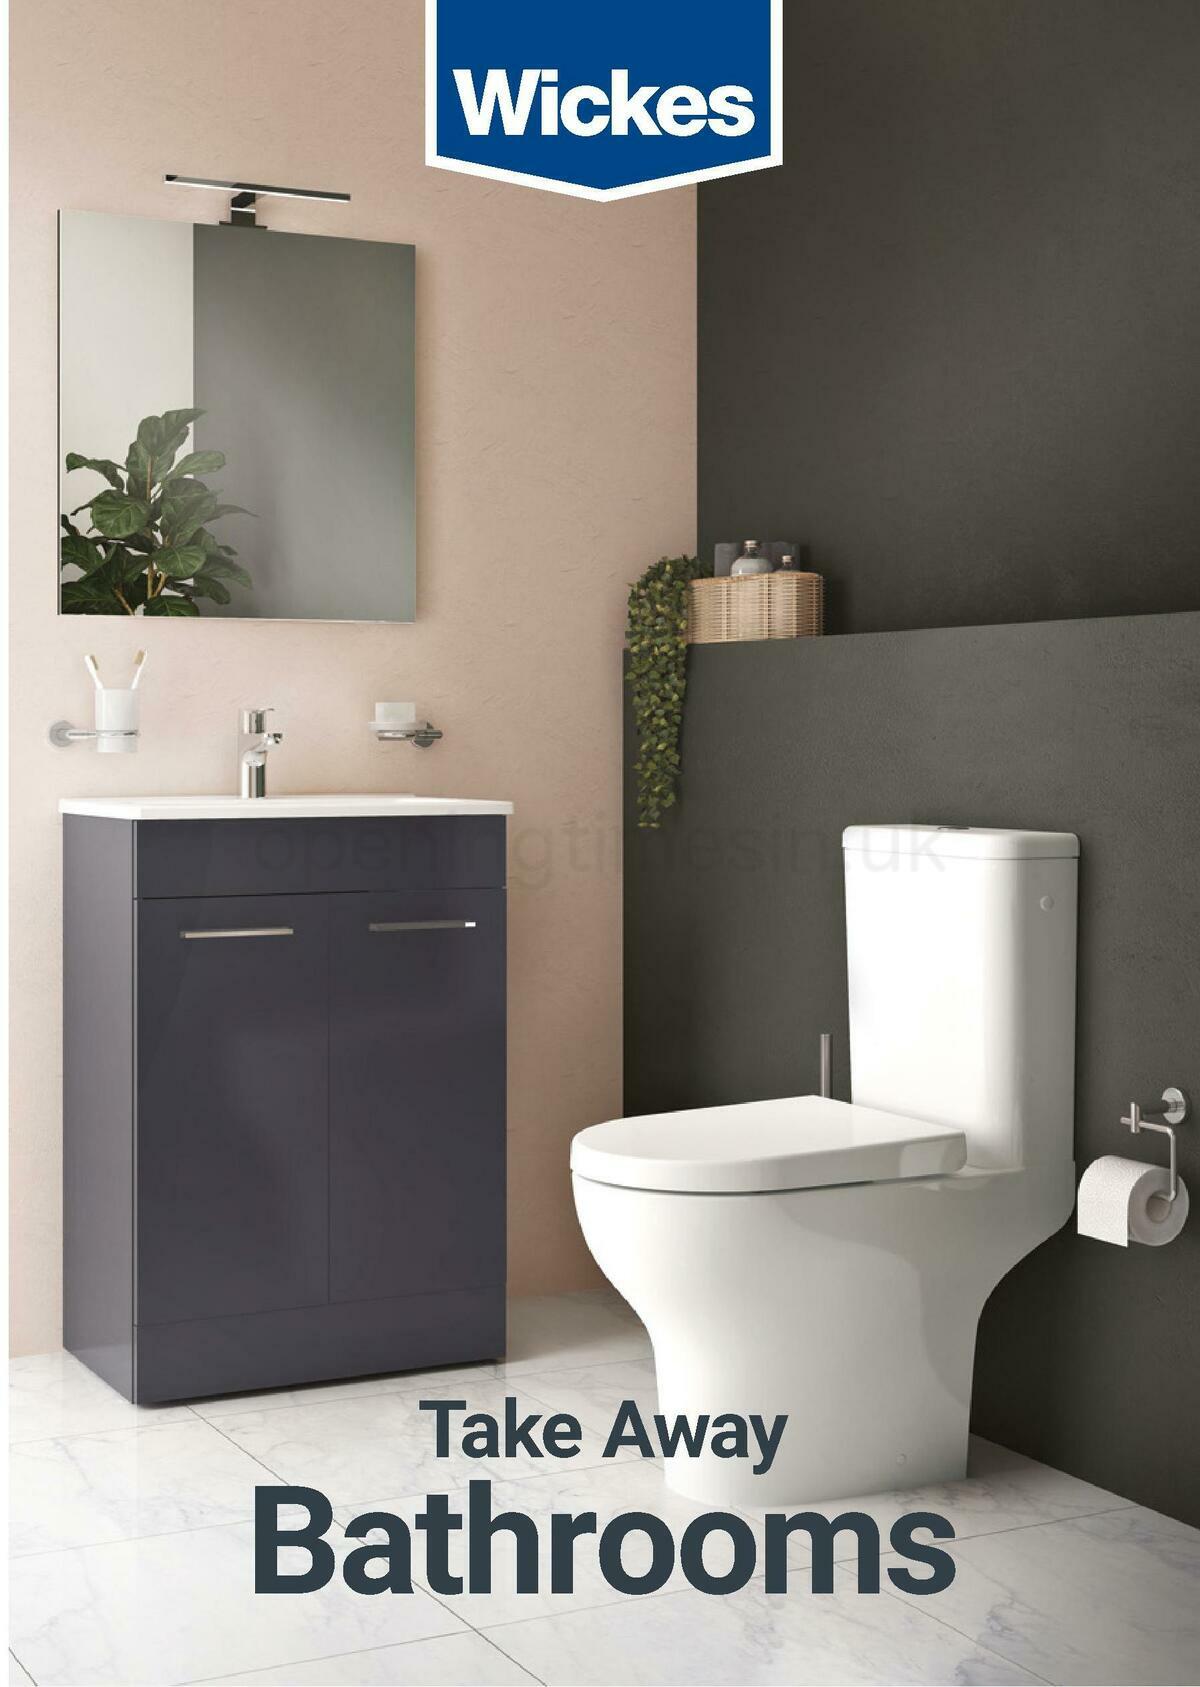 Wickes Take away bathrooms brochure Offers from 20 June